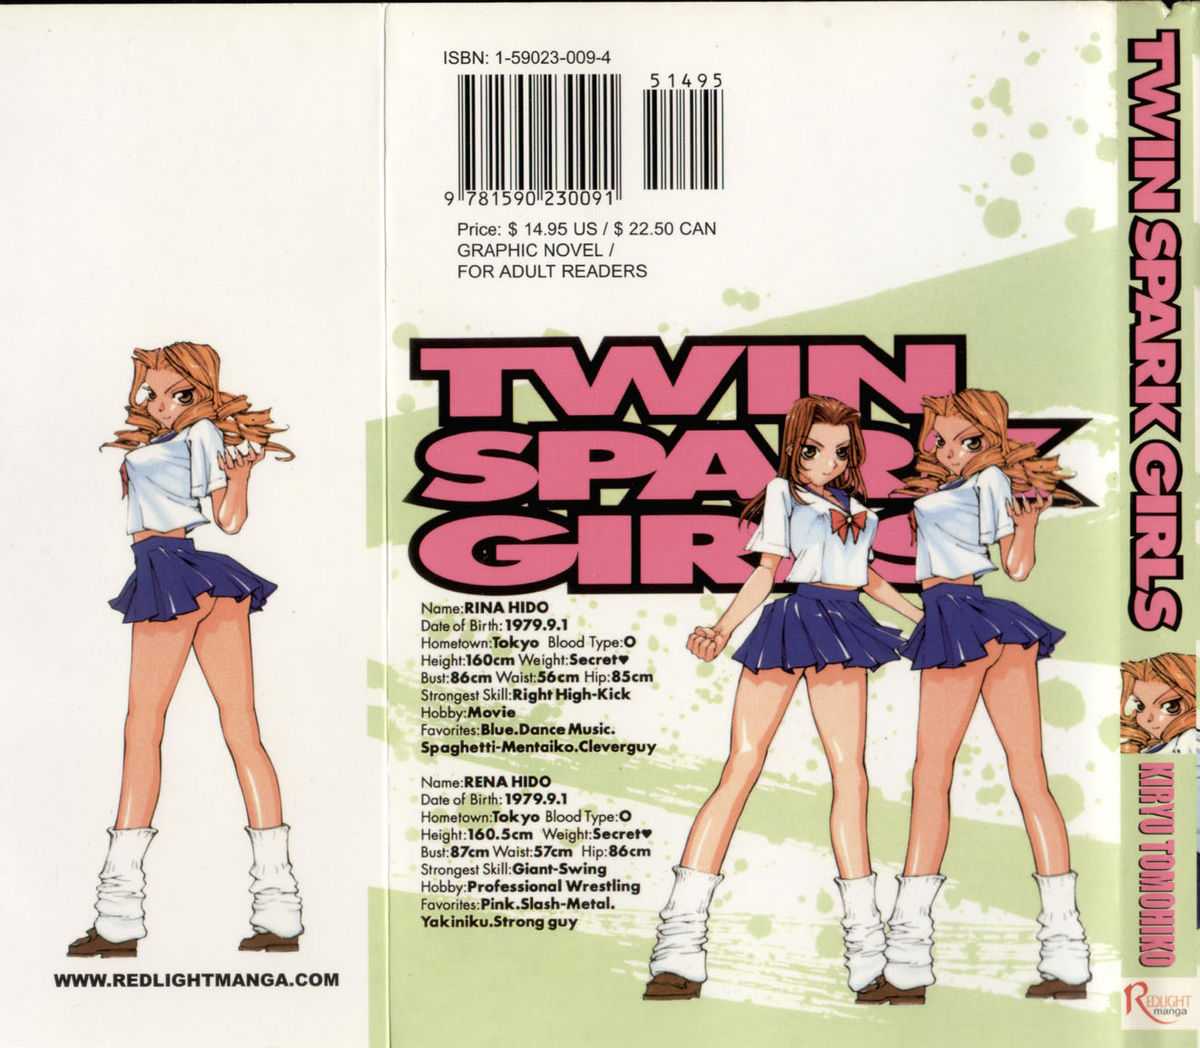 [Kiryu Tomohiko] Twin Spark Girls (English) 